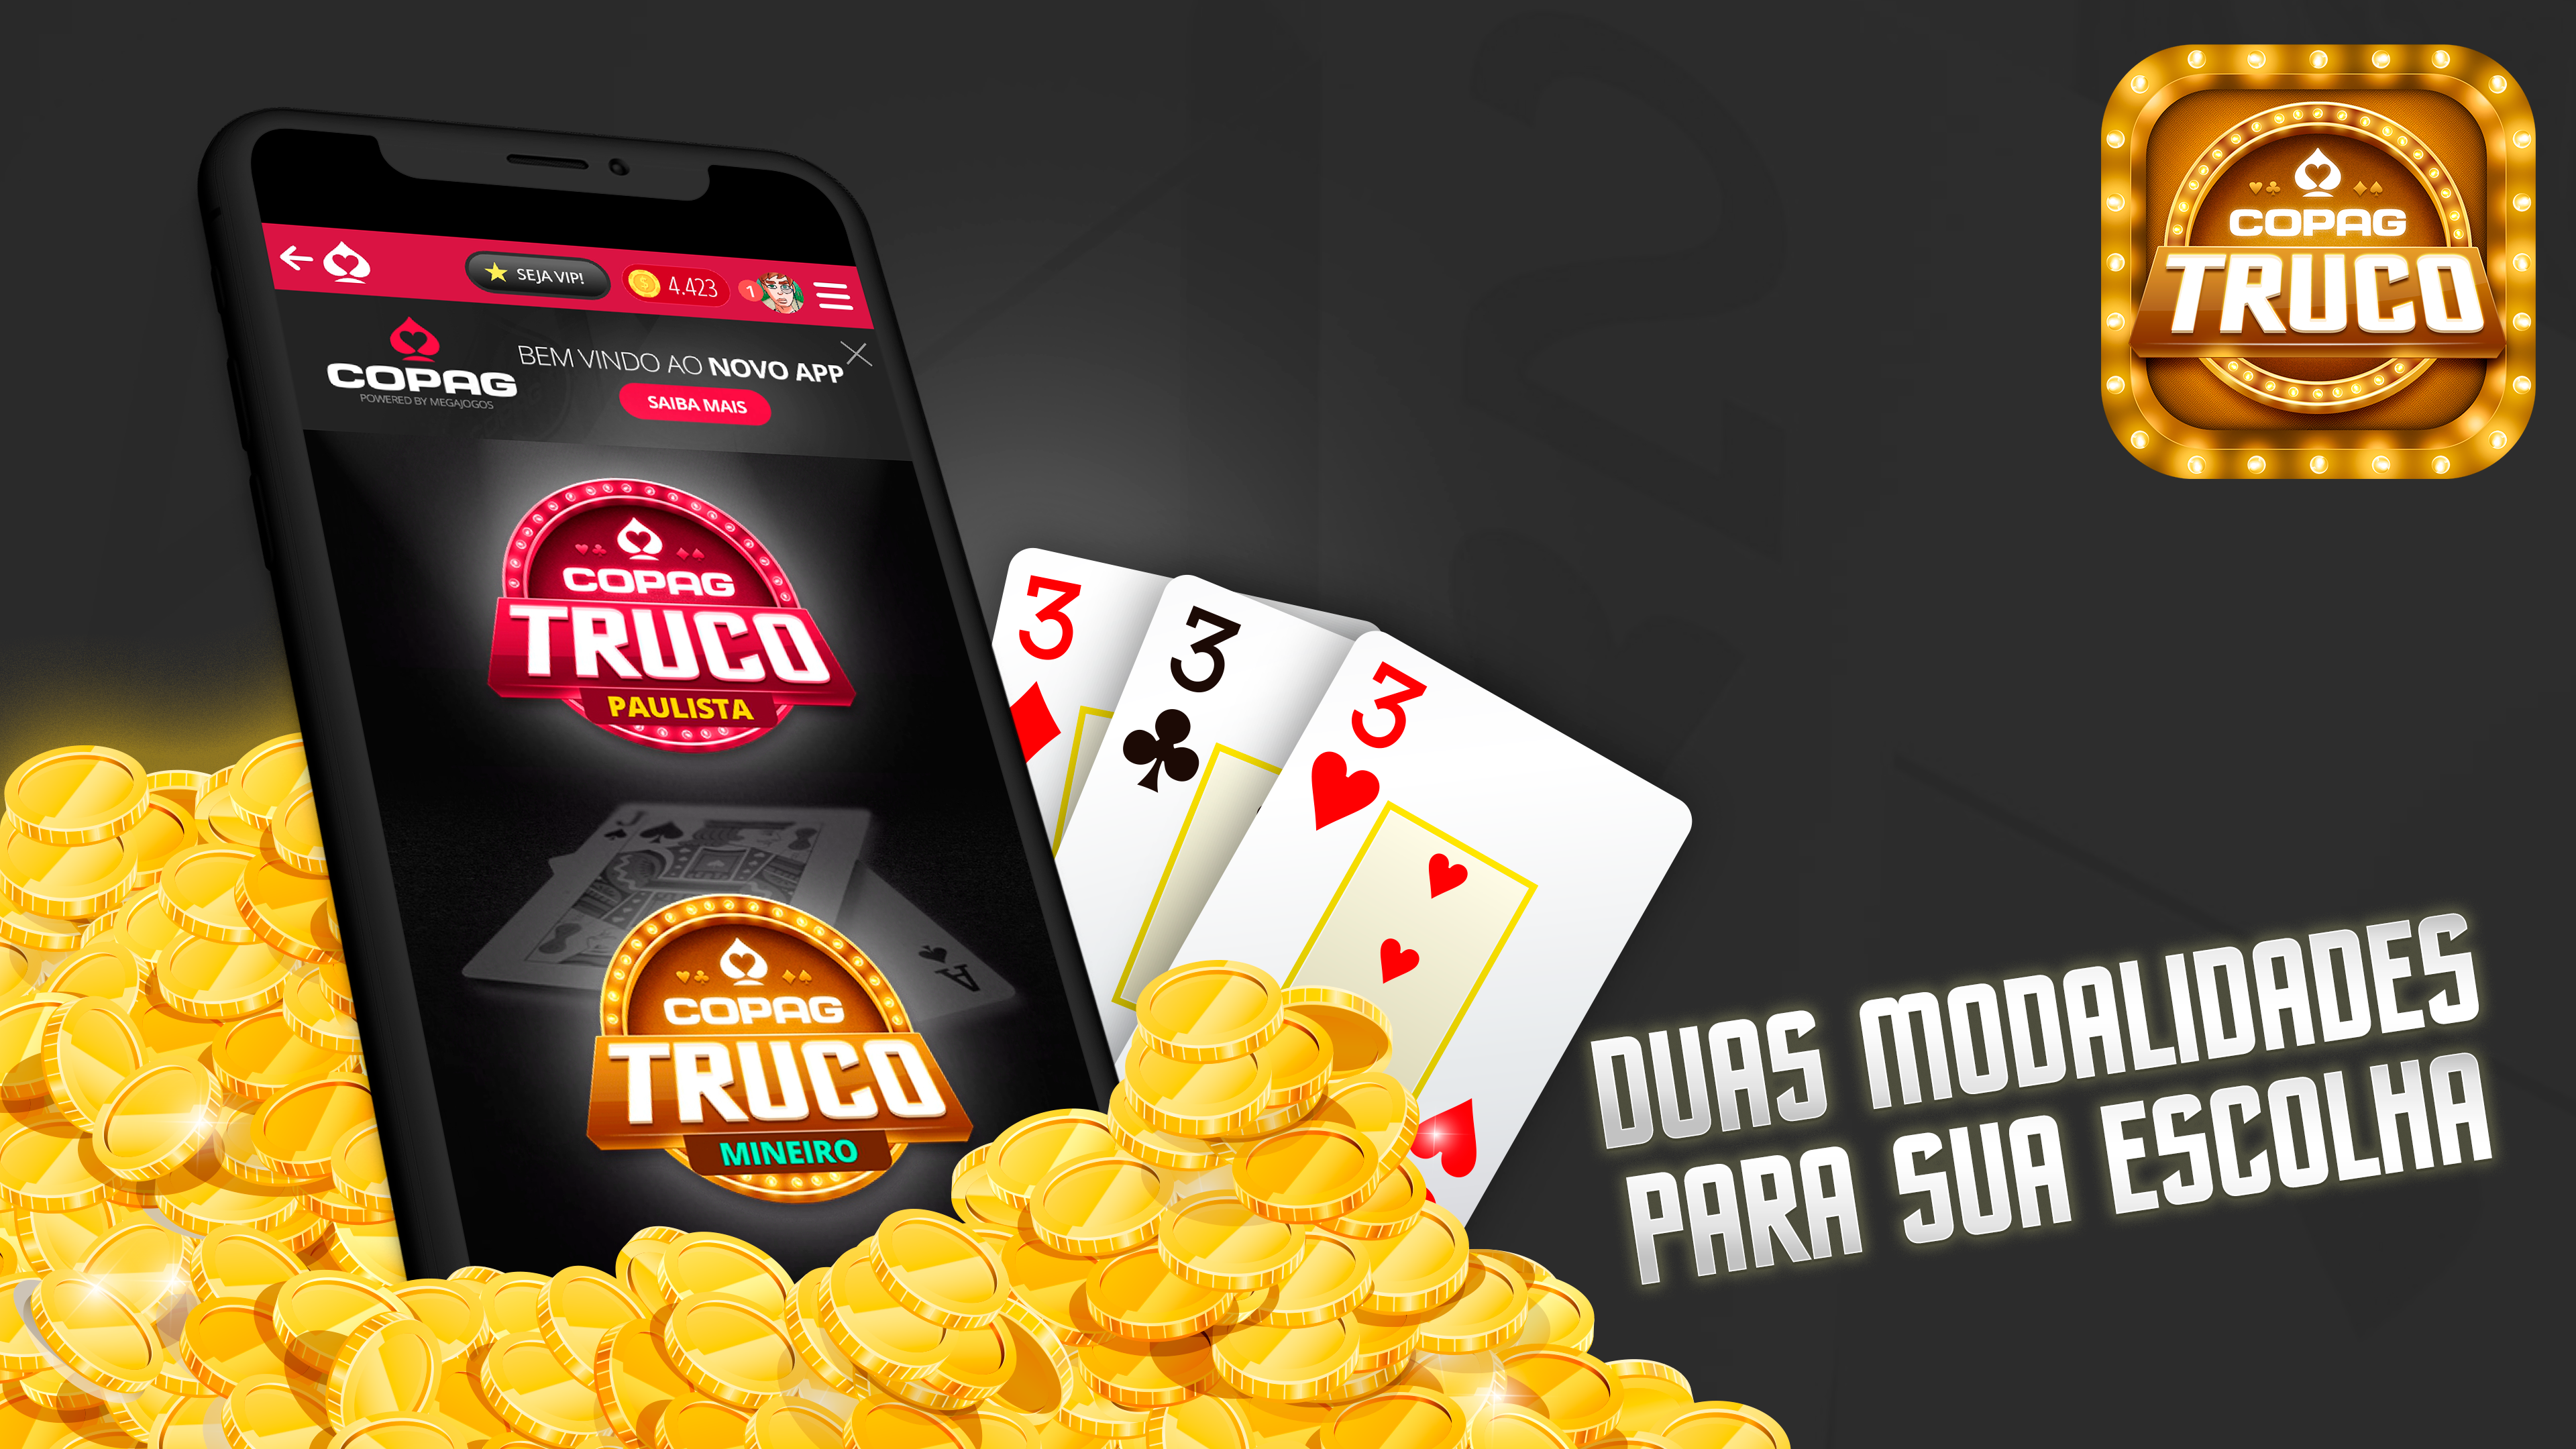 Android application Truco - Copag Play screenshort